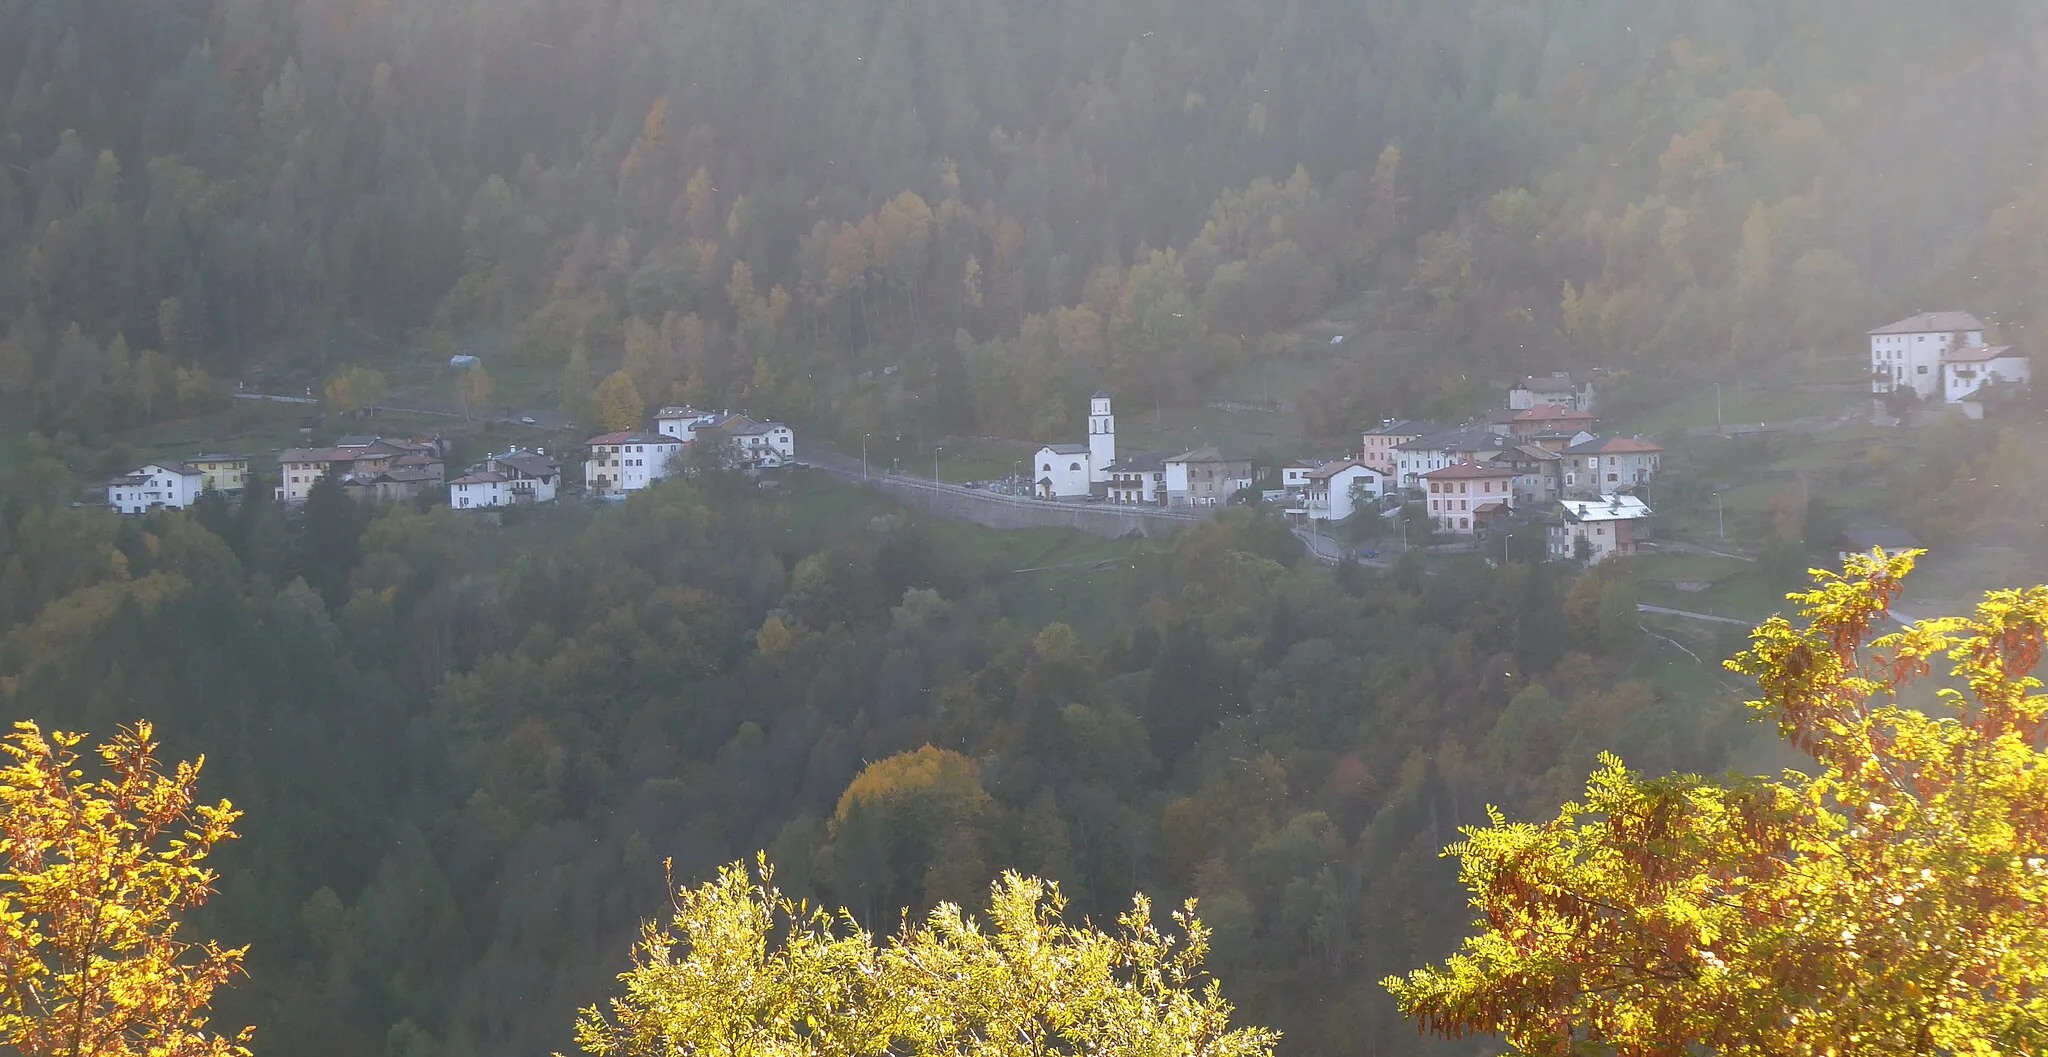 Photo showing: Valcava (Segonzano) as seen from Facendi (Sover), Trentino, Italy